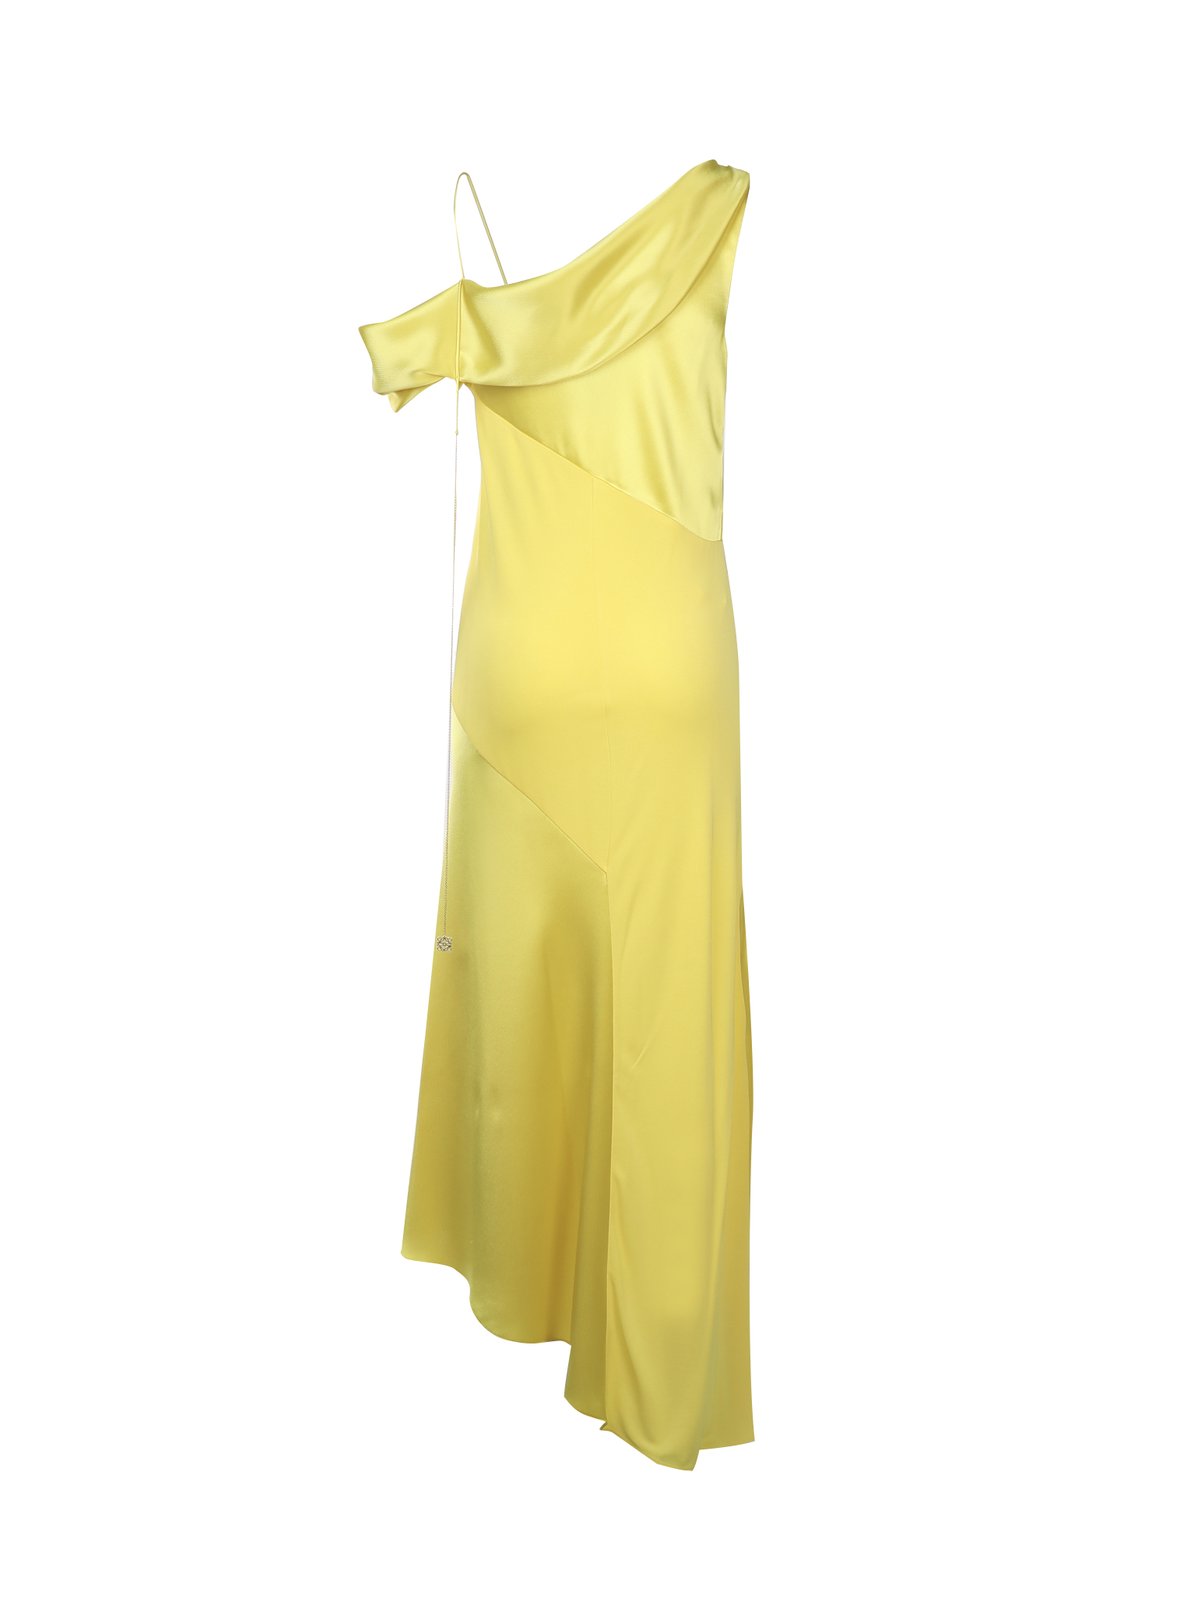 Loewe Asymmetric Sleeveless Dress